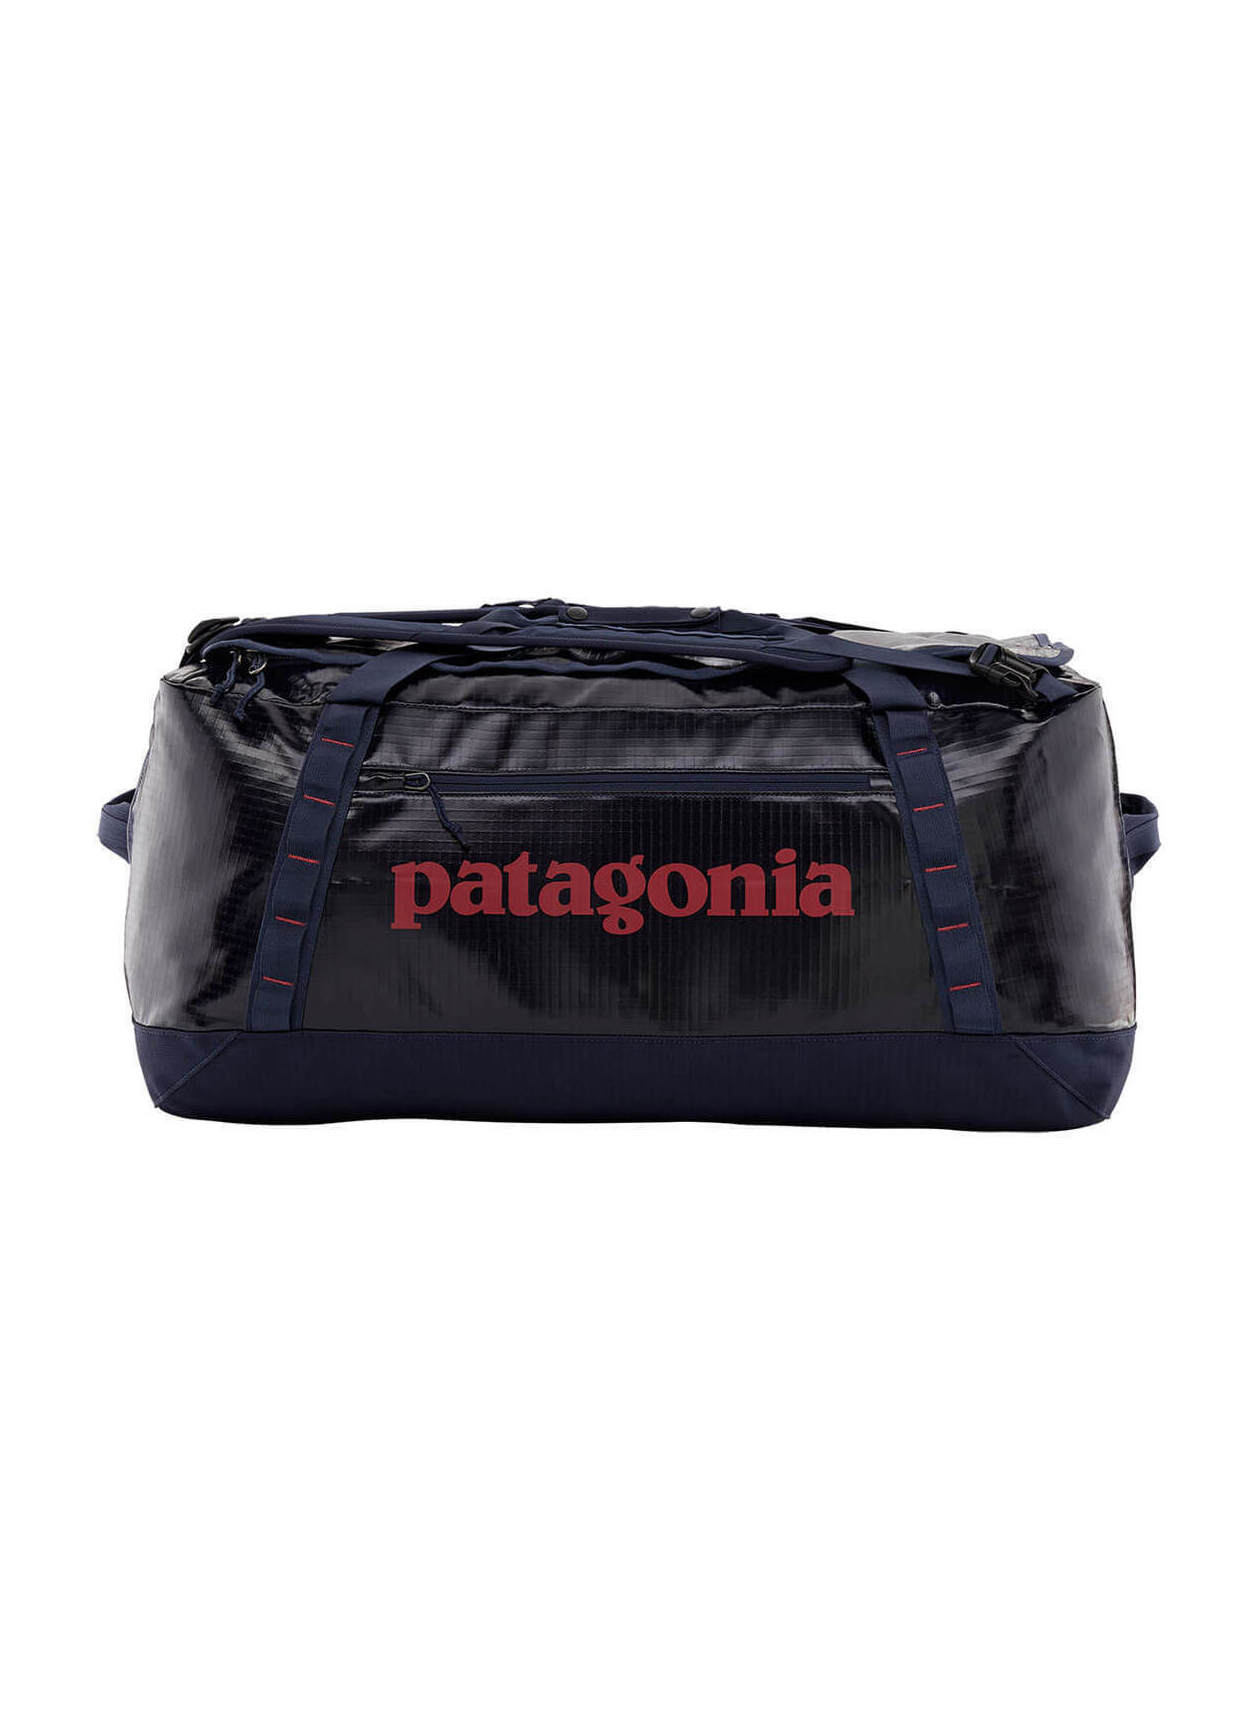 Patagonia Classic Navy Black Hole Duffel Bag 70L